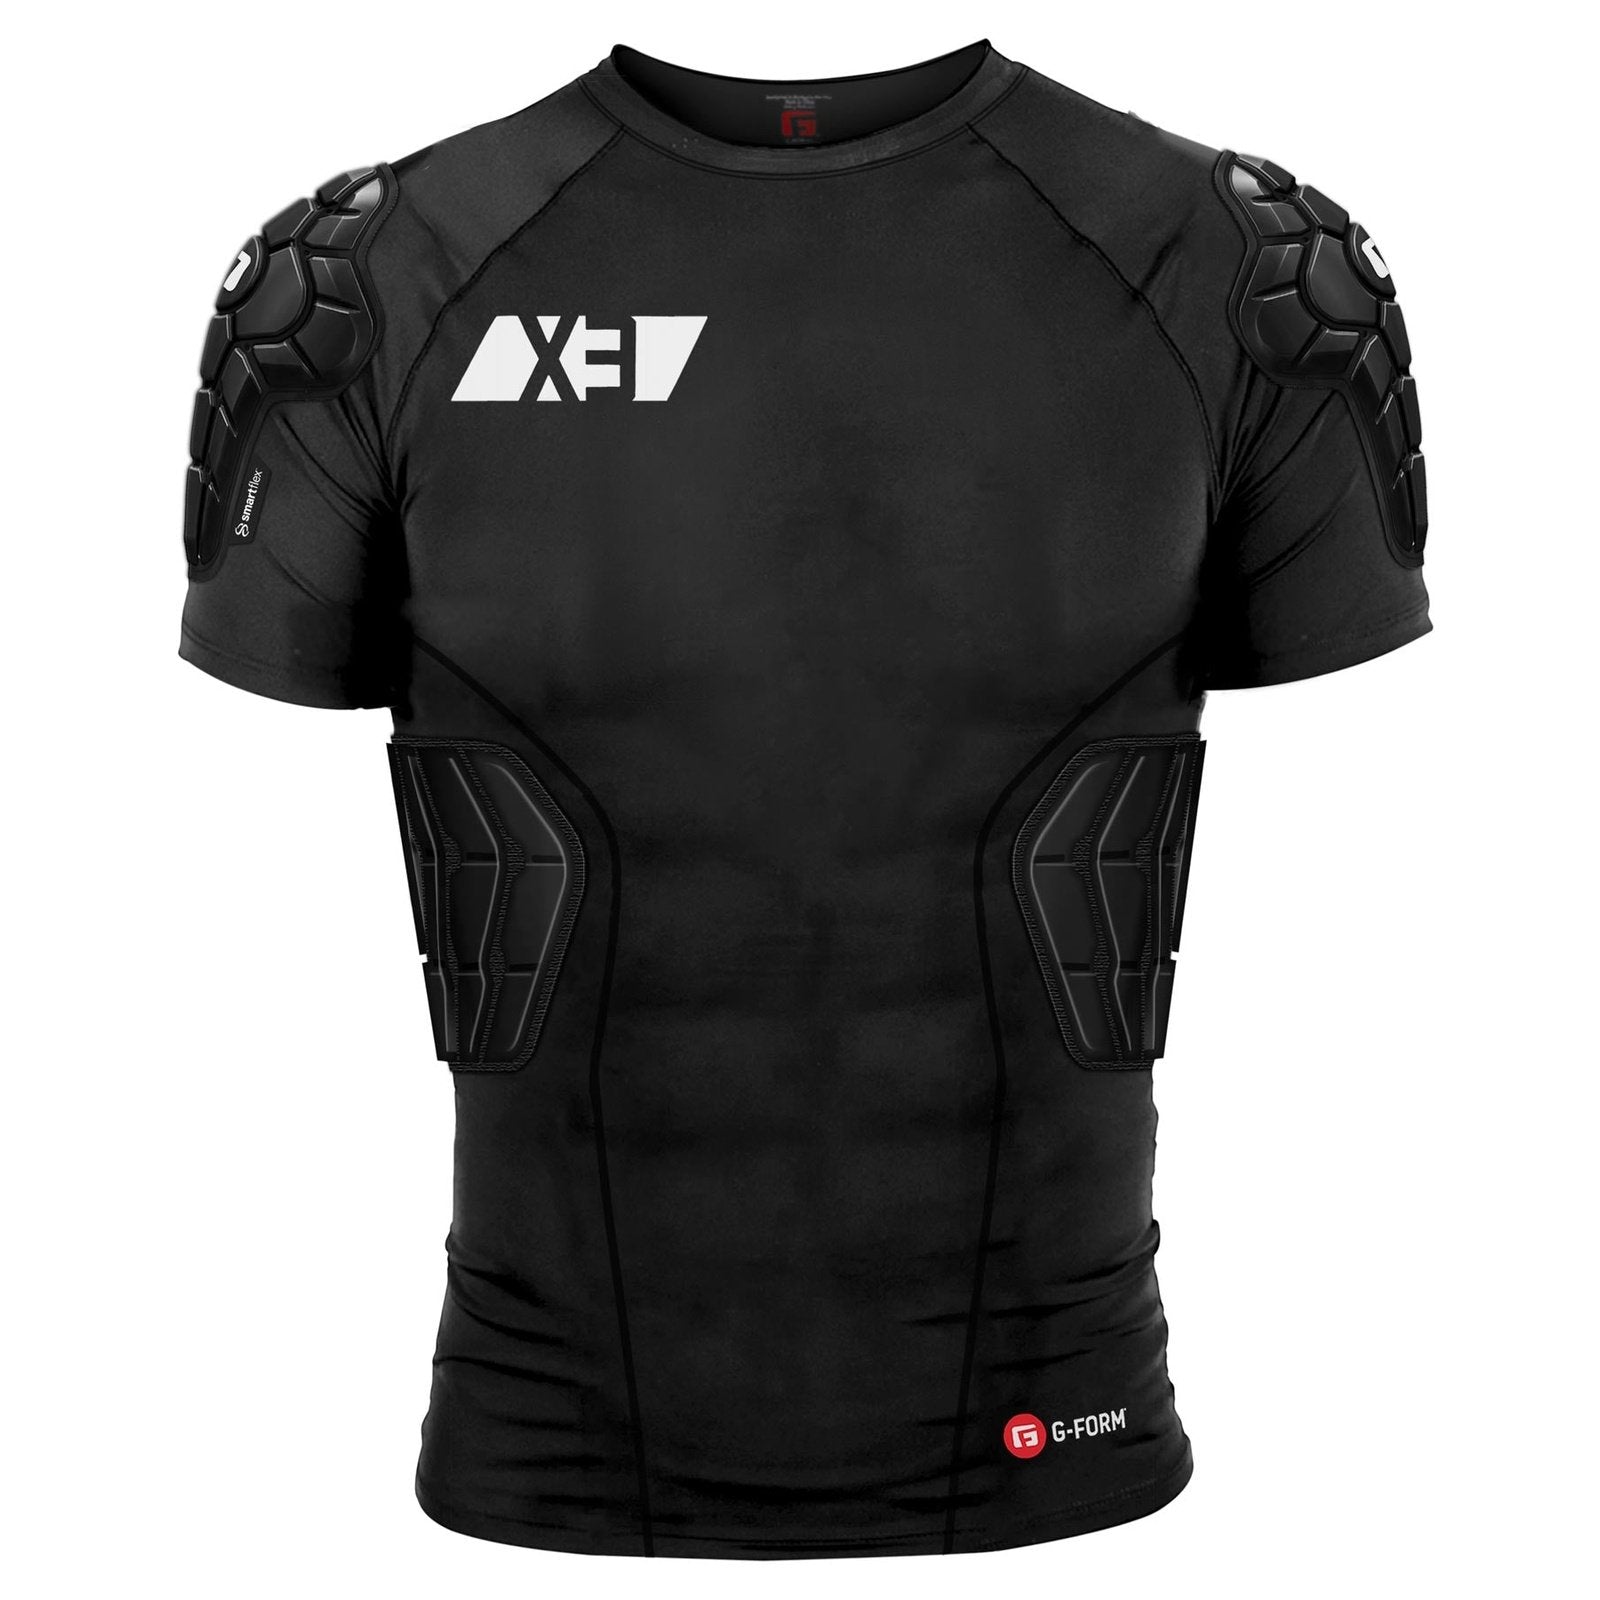 Gform Pro-X3 SS Shirt Black/Black - M